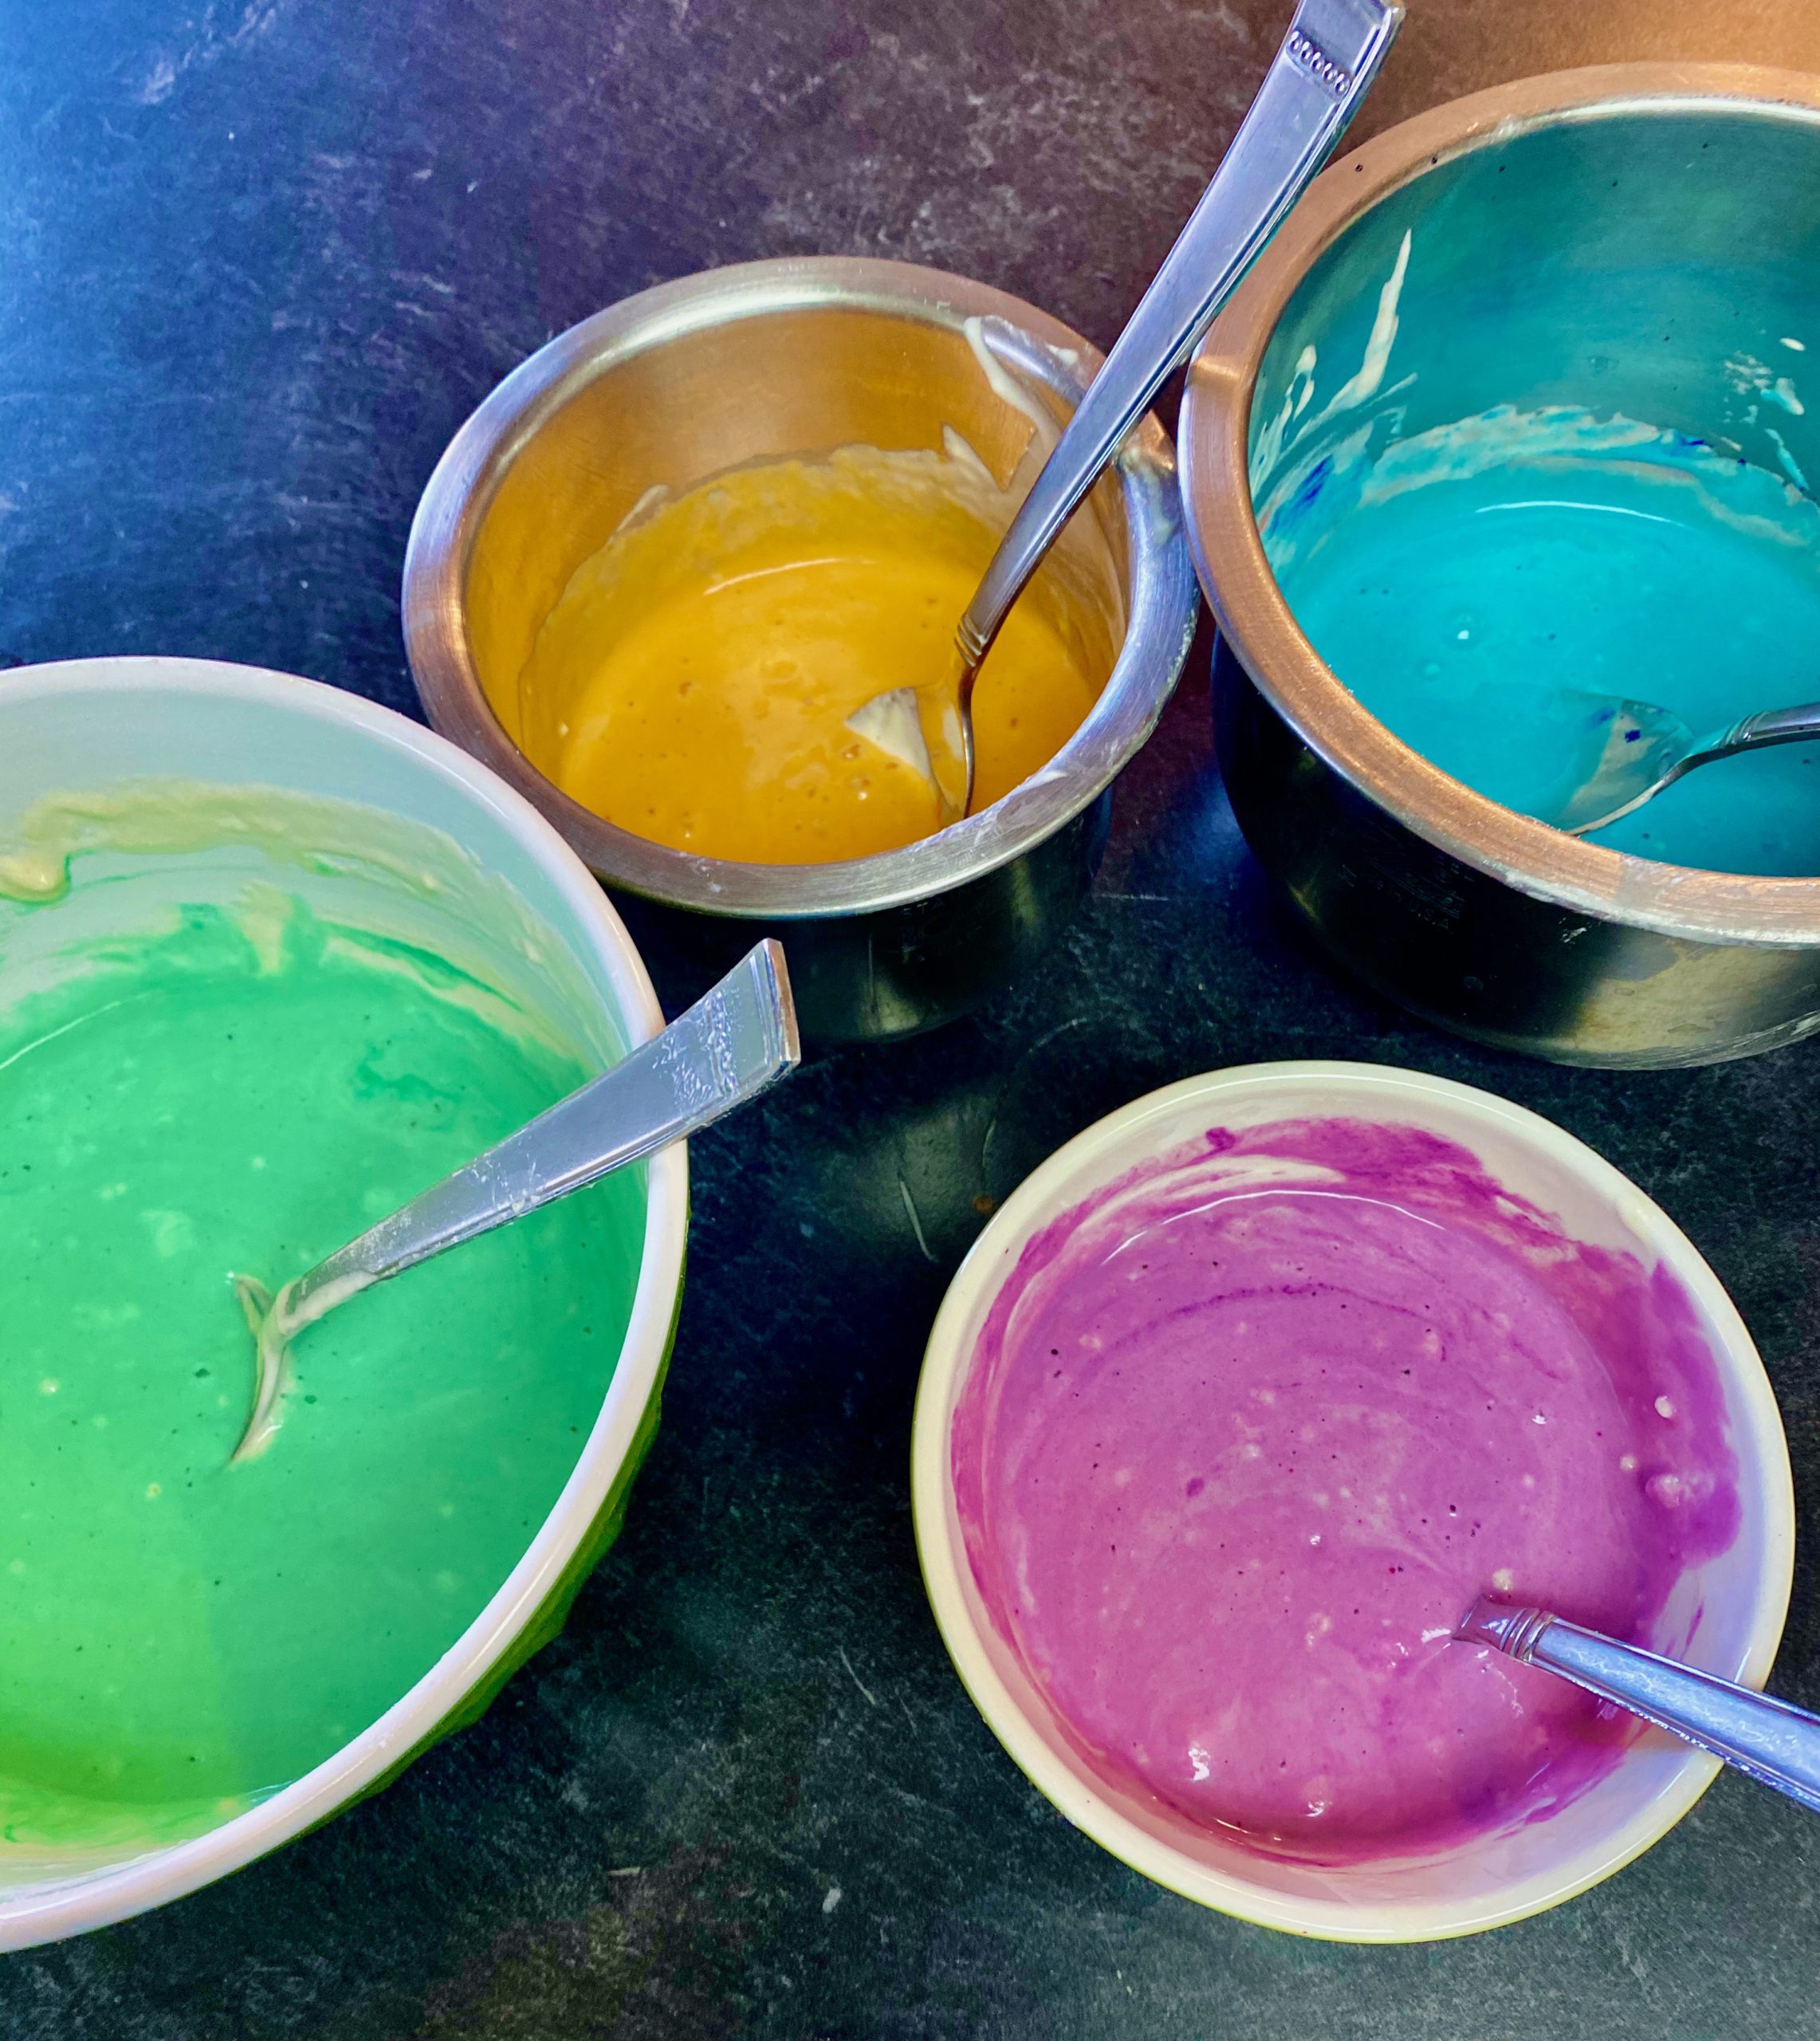 Bowls of pancake batter in four colors: green, orange, blue, and pruple.